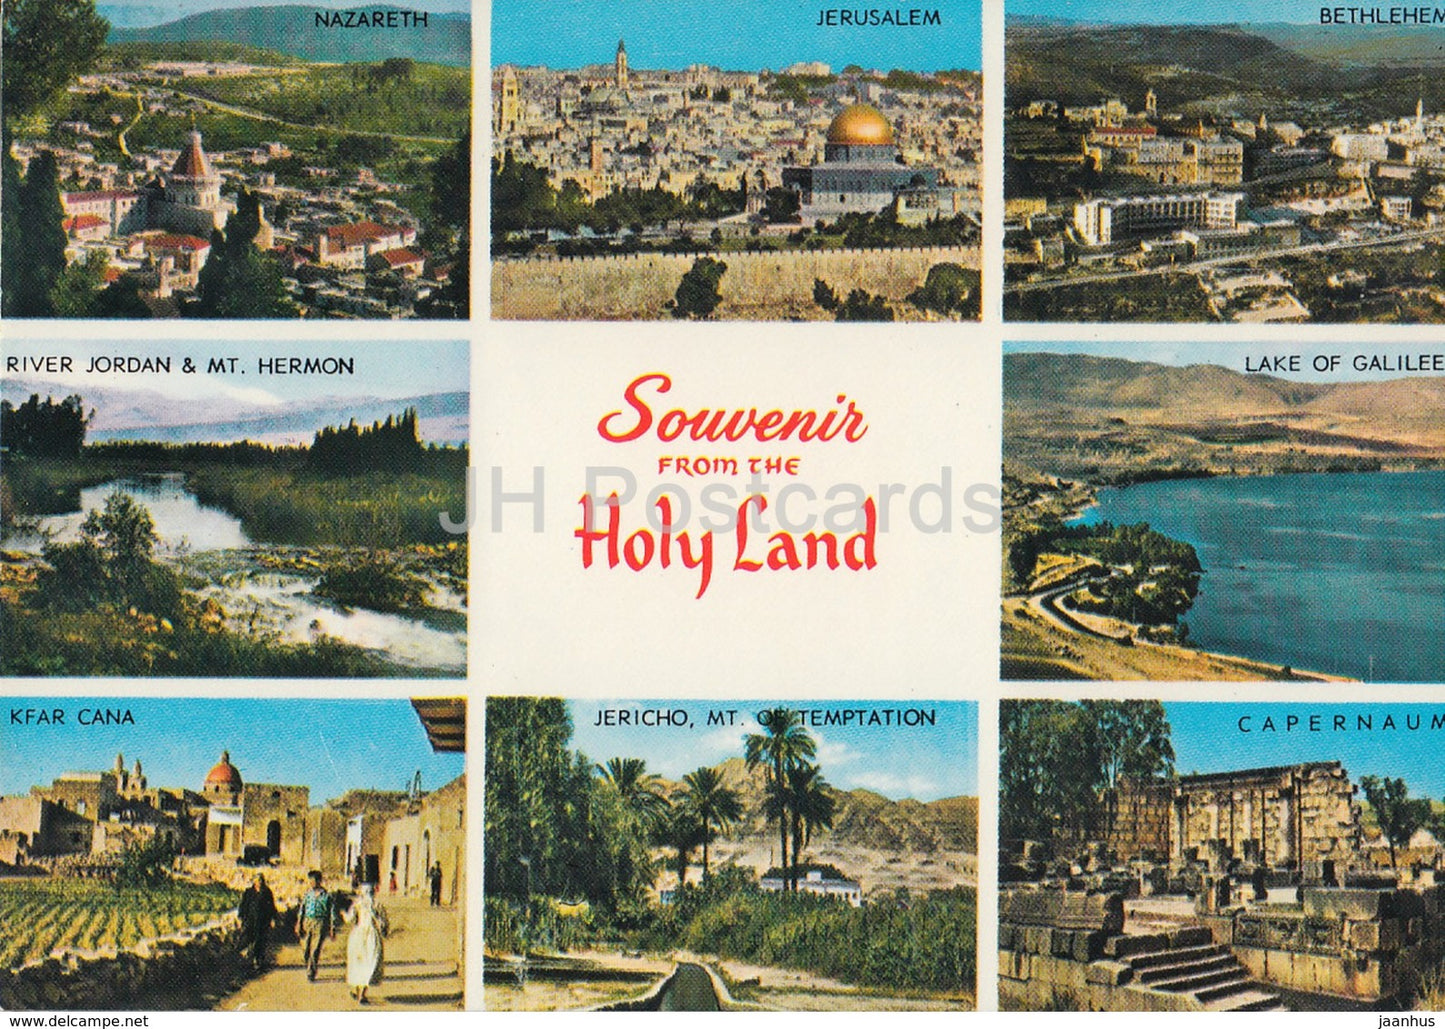 Souvenir from the Holy Land - Nazareth - Jerusalem - Betlehem - Jericho - multiview - 1988 - Israel - used - JH Postcards